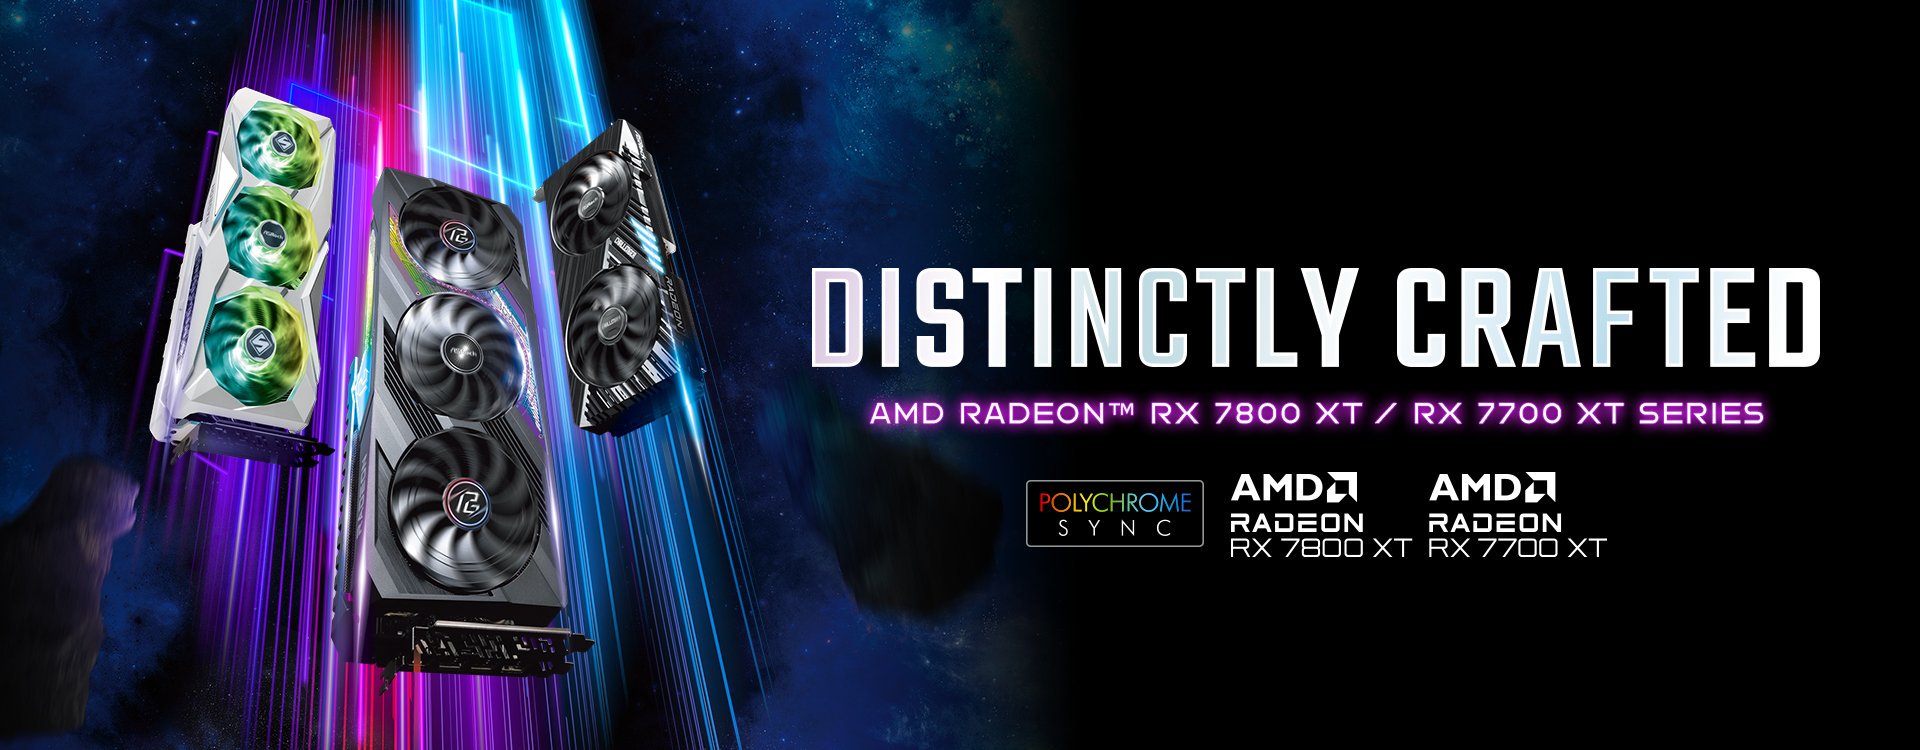 AMD Radeon RX 7700 XT & 7700 XT Launch